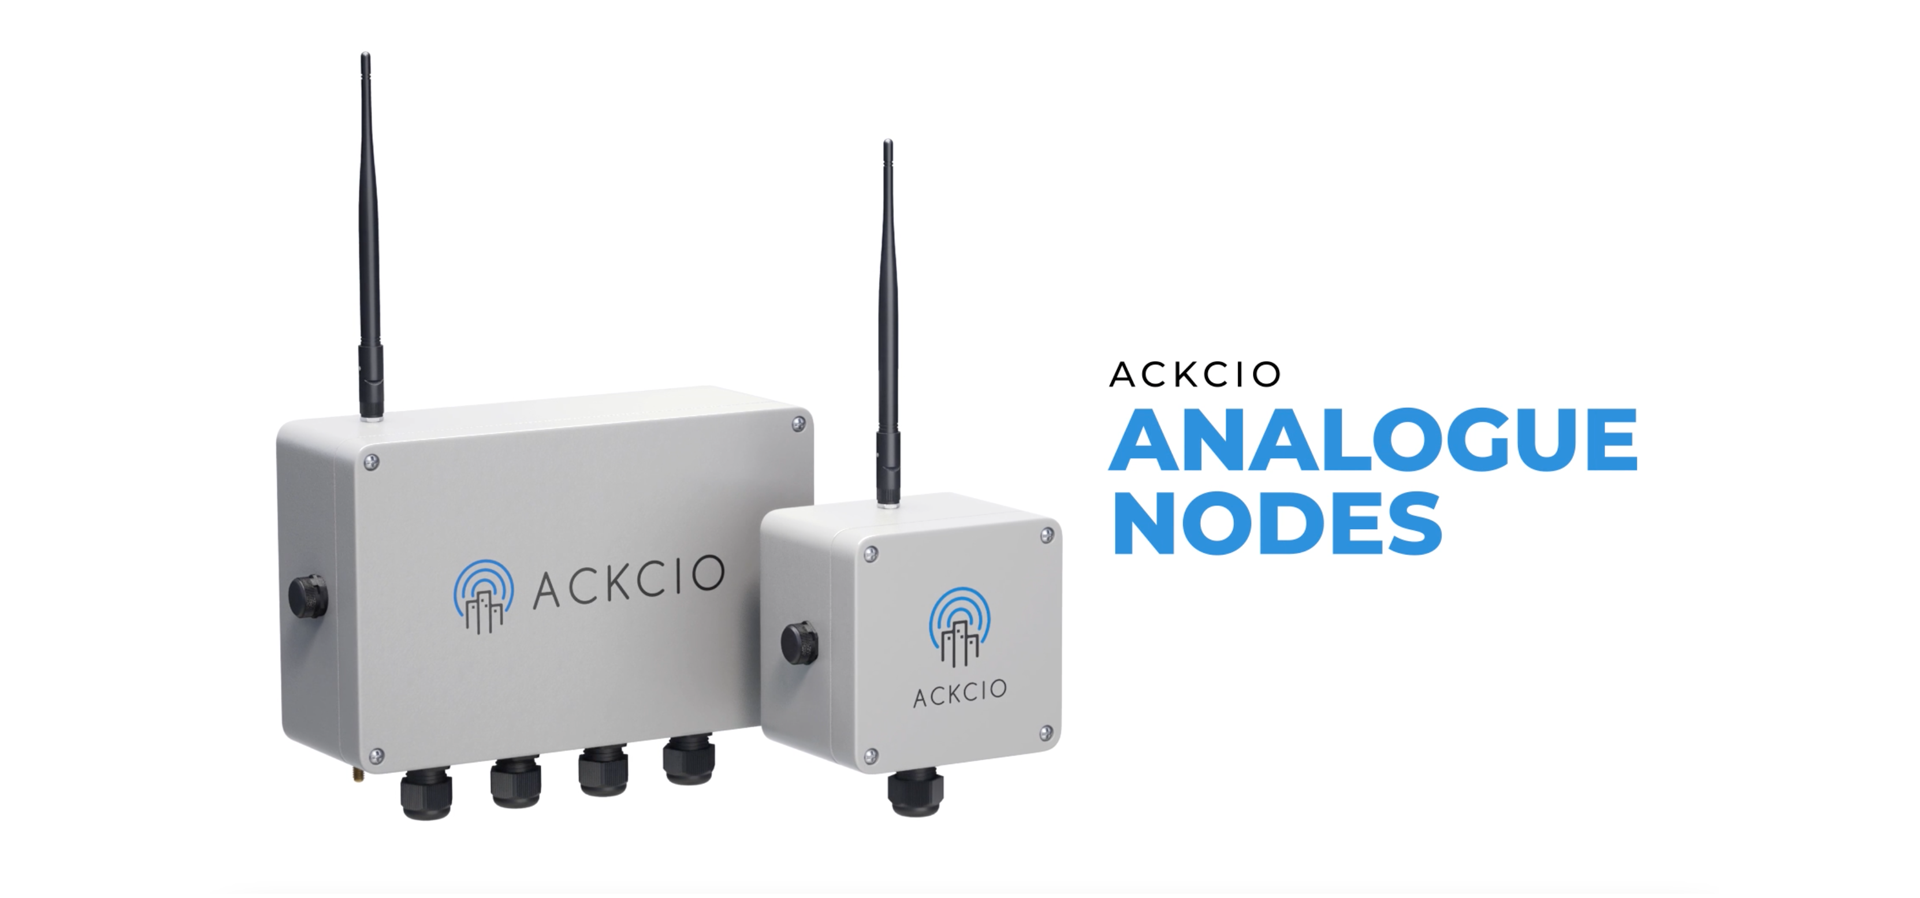 Ackcio Analogue Node Video Image